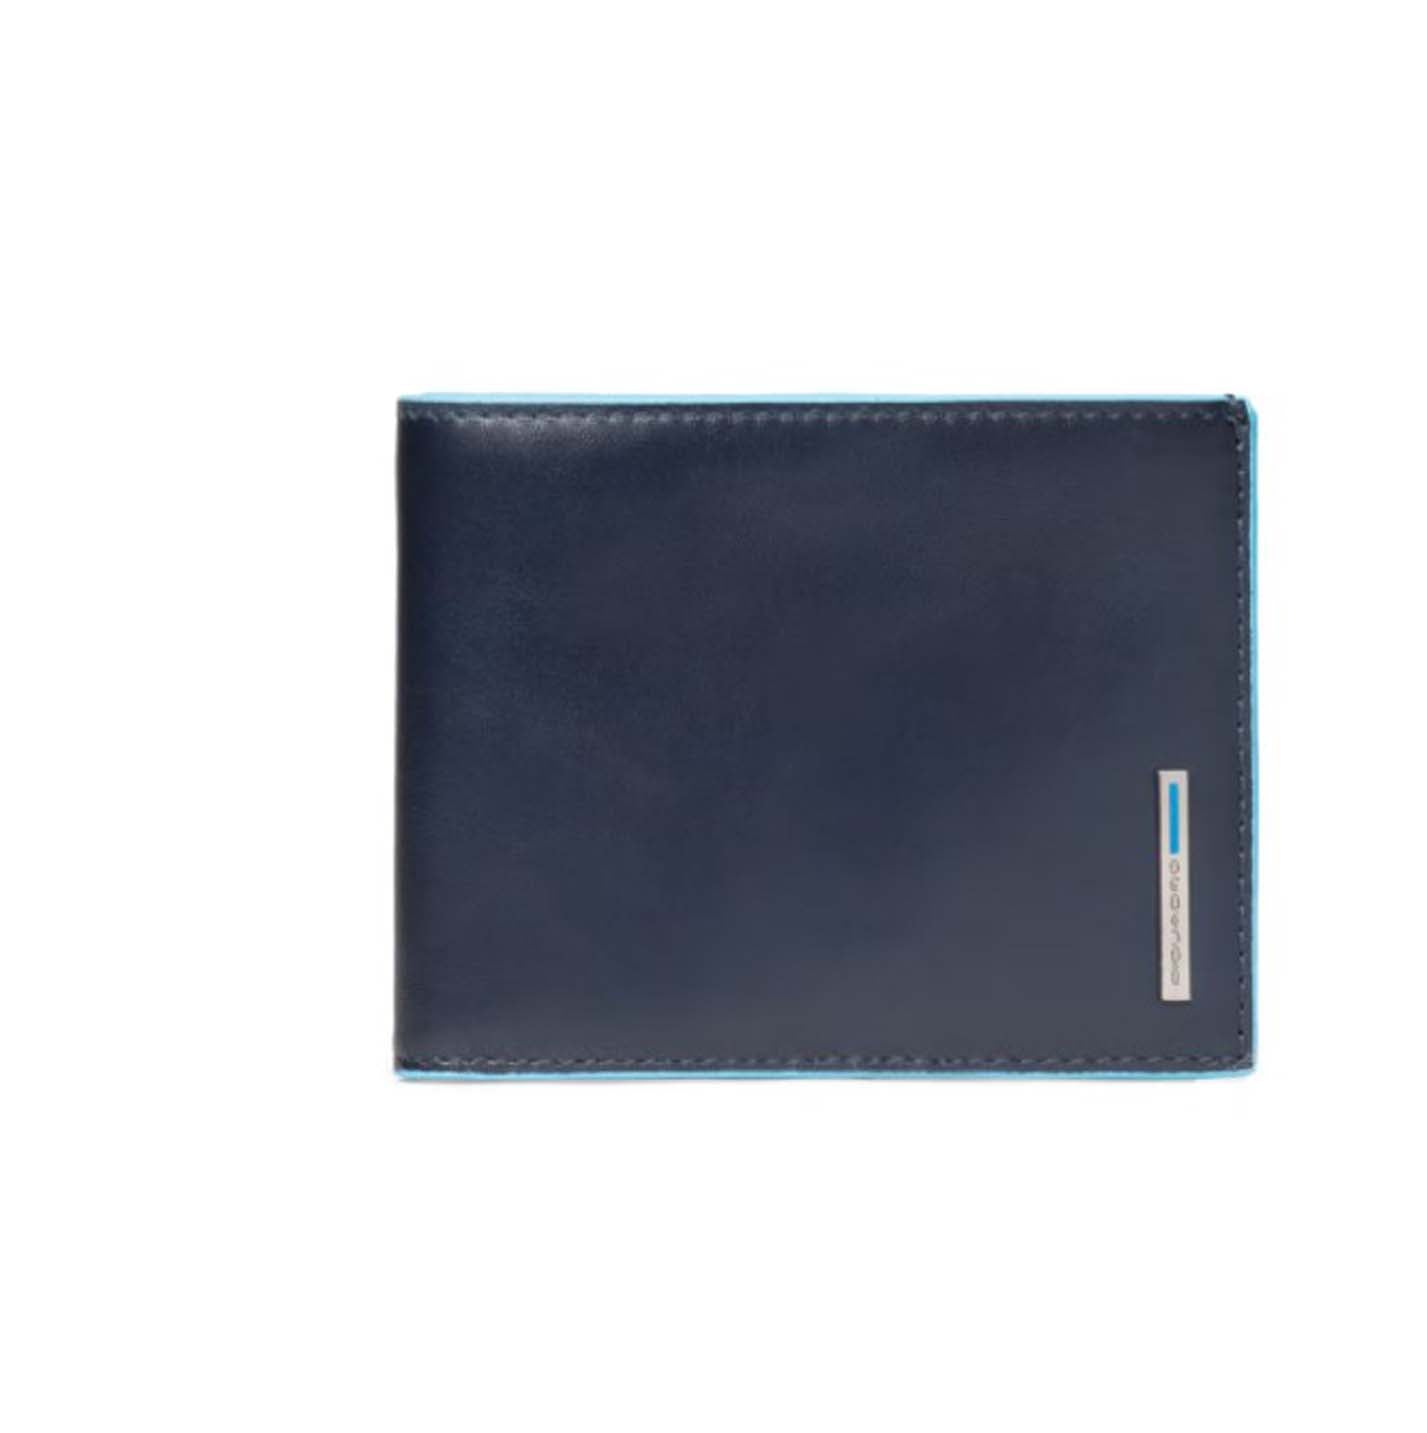 Piquadro wallet